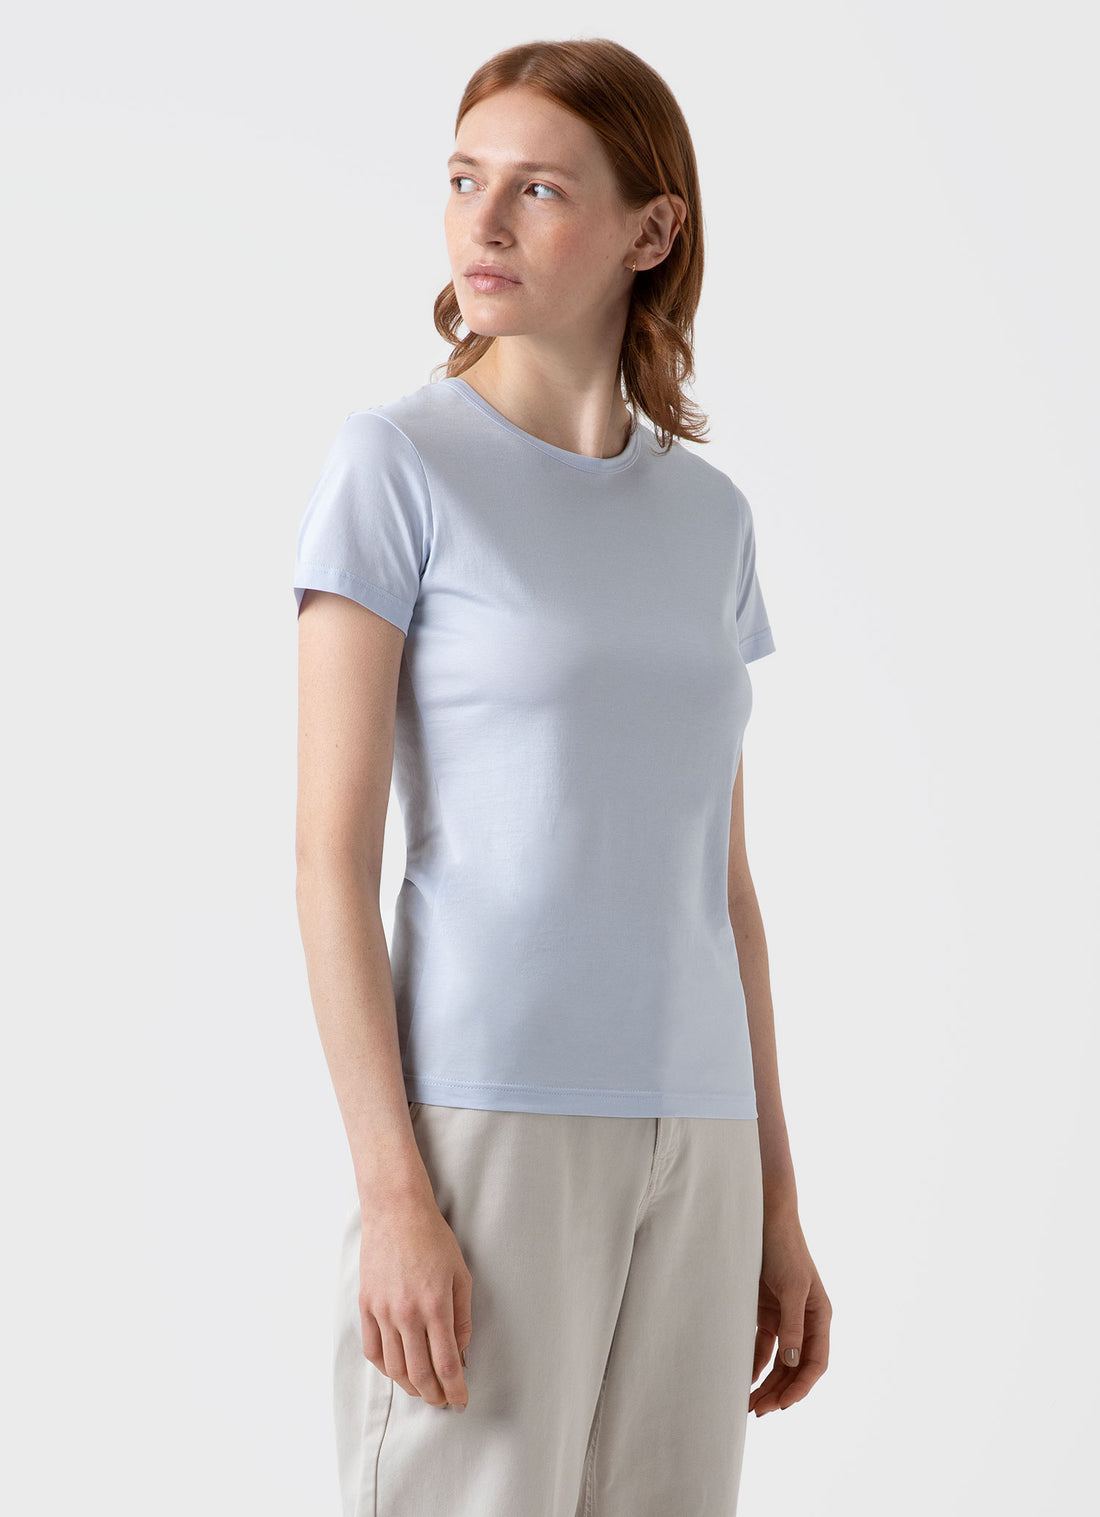 Women's Classic T-shirt in Pastel Blue